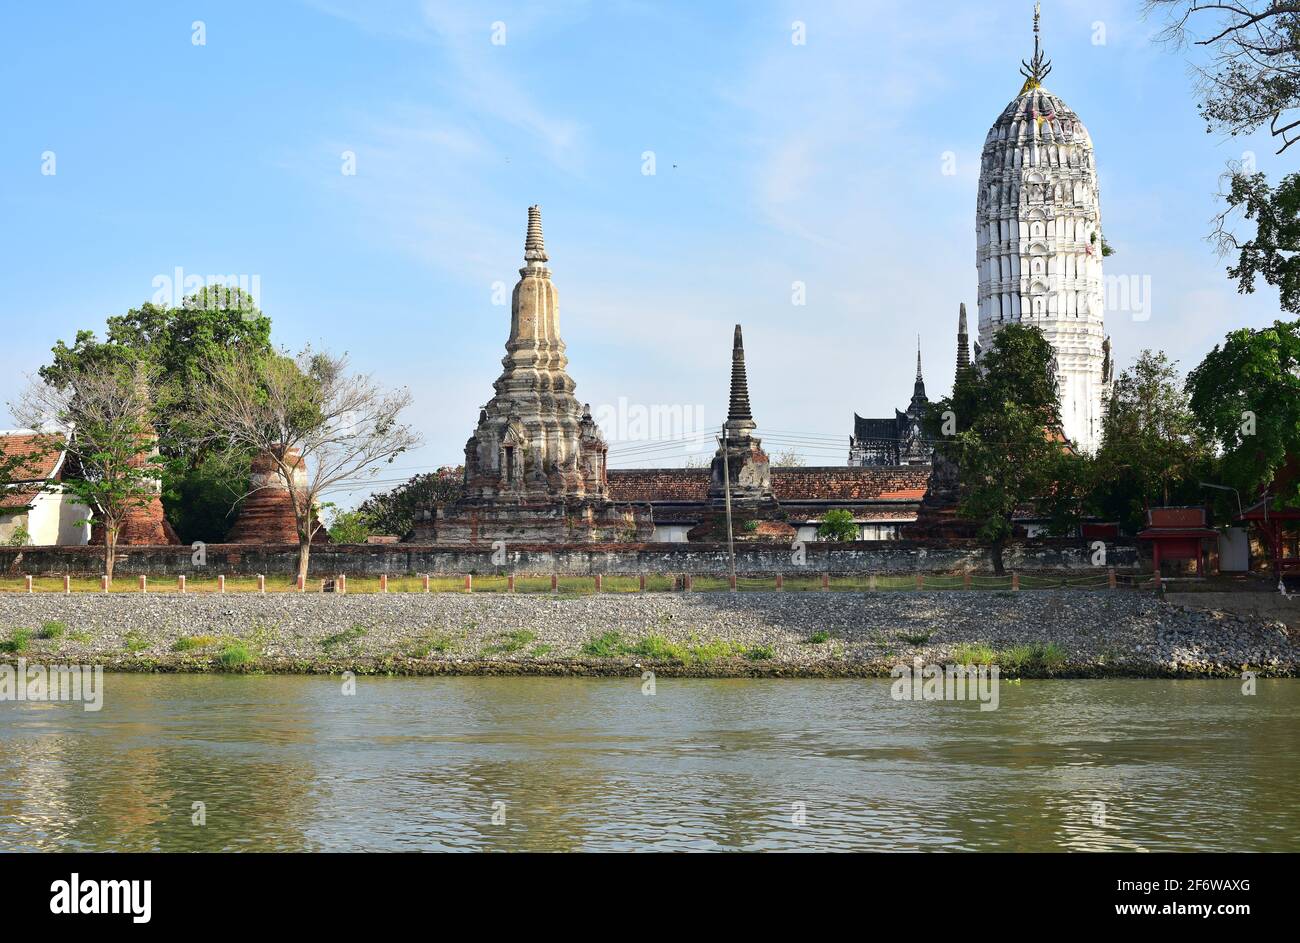 Ayutthaya Historical Park, Wat Phutthaisawan buddhistischer Tempel (14. Jahrhundert, Weltkulturerbe). Phra Nakhon Si Ayutthaya, Thailand. Stockfoto